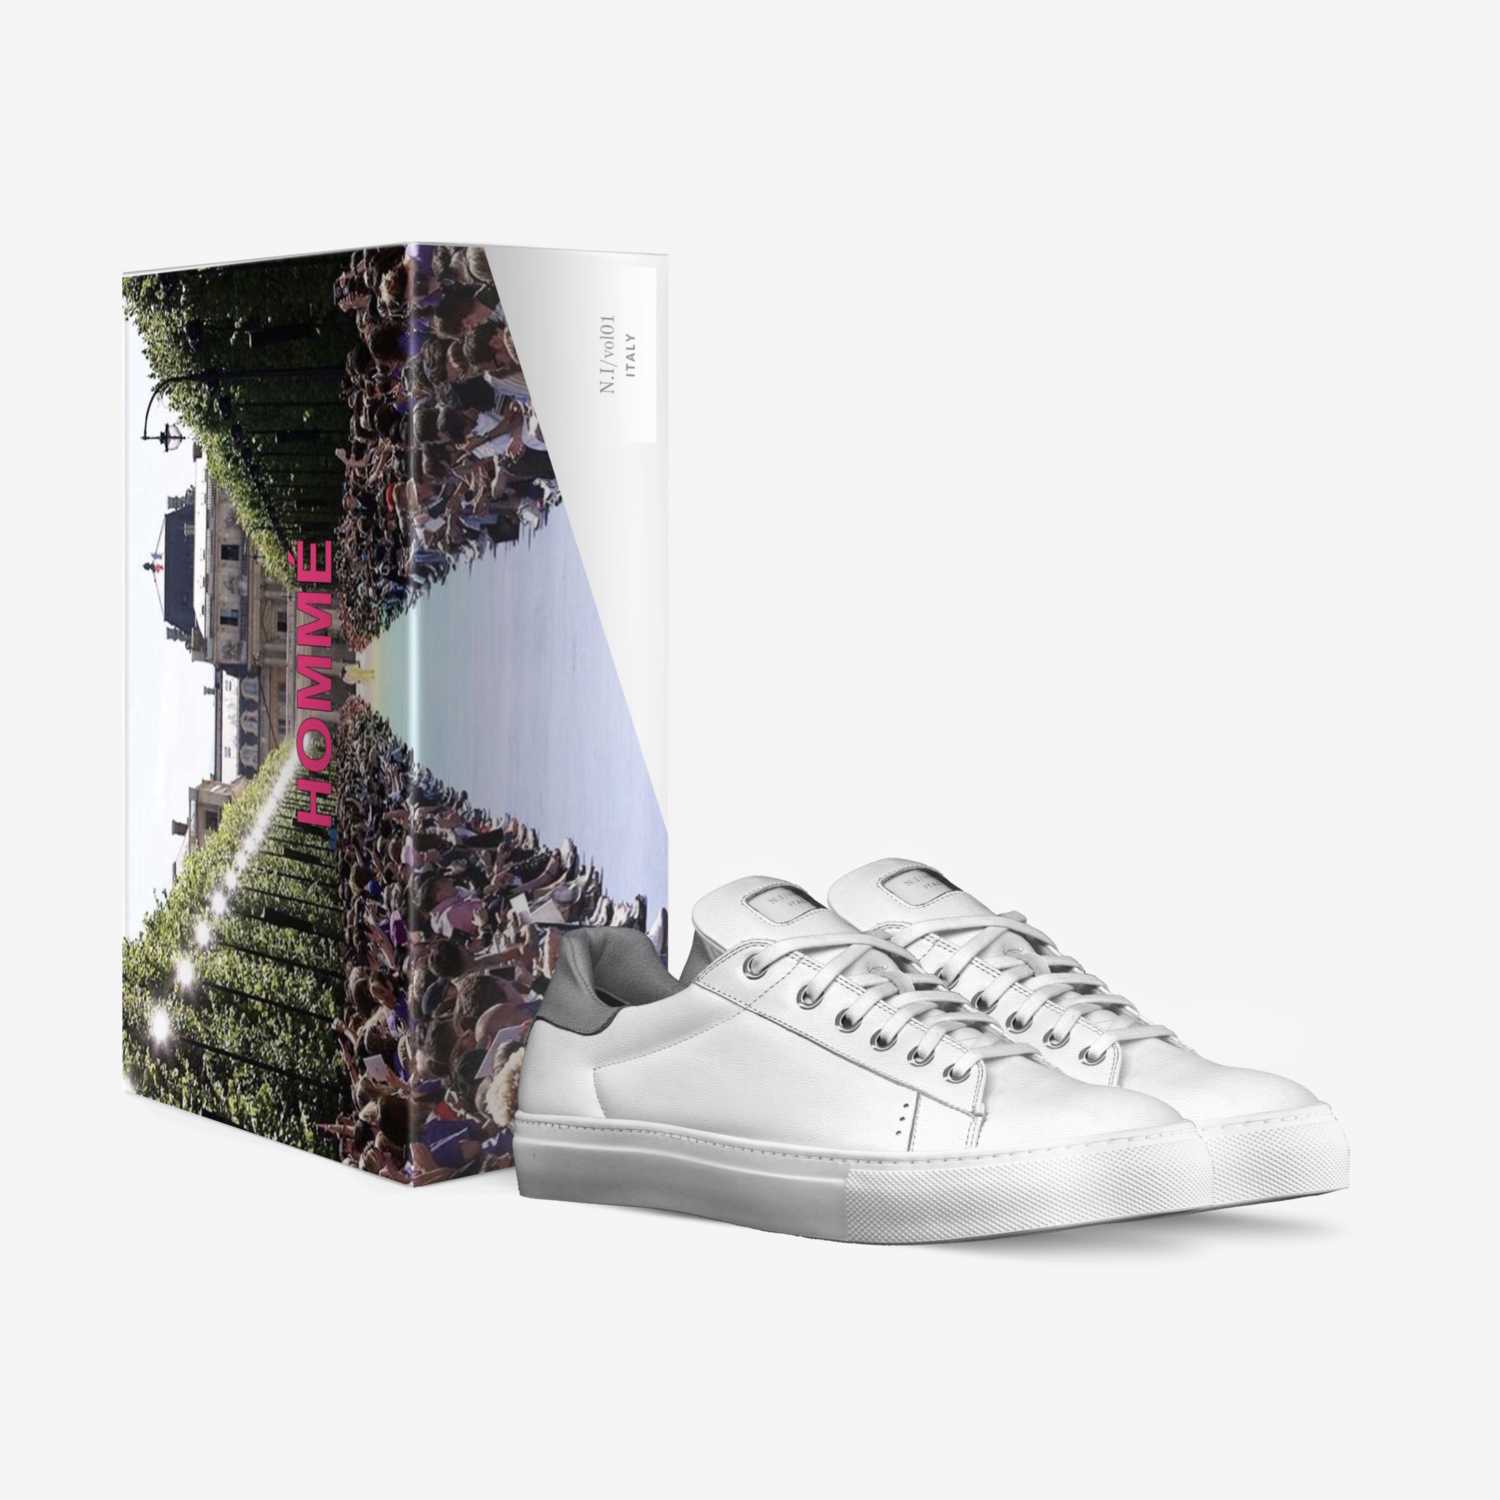 N.I/vol01 custom made in Italy shoes by Nicholas Ingoglia | Box view